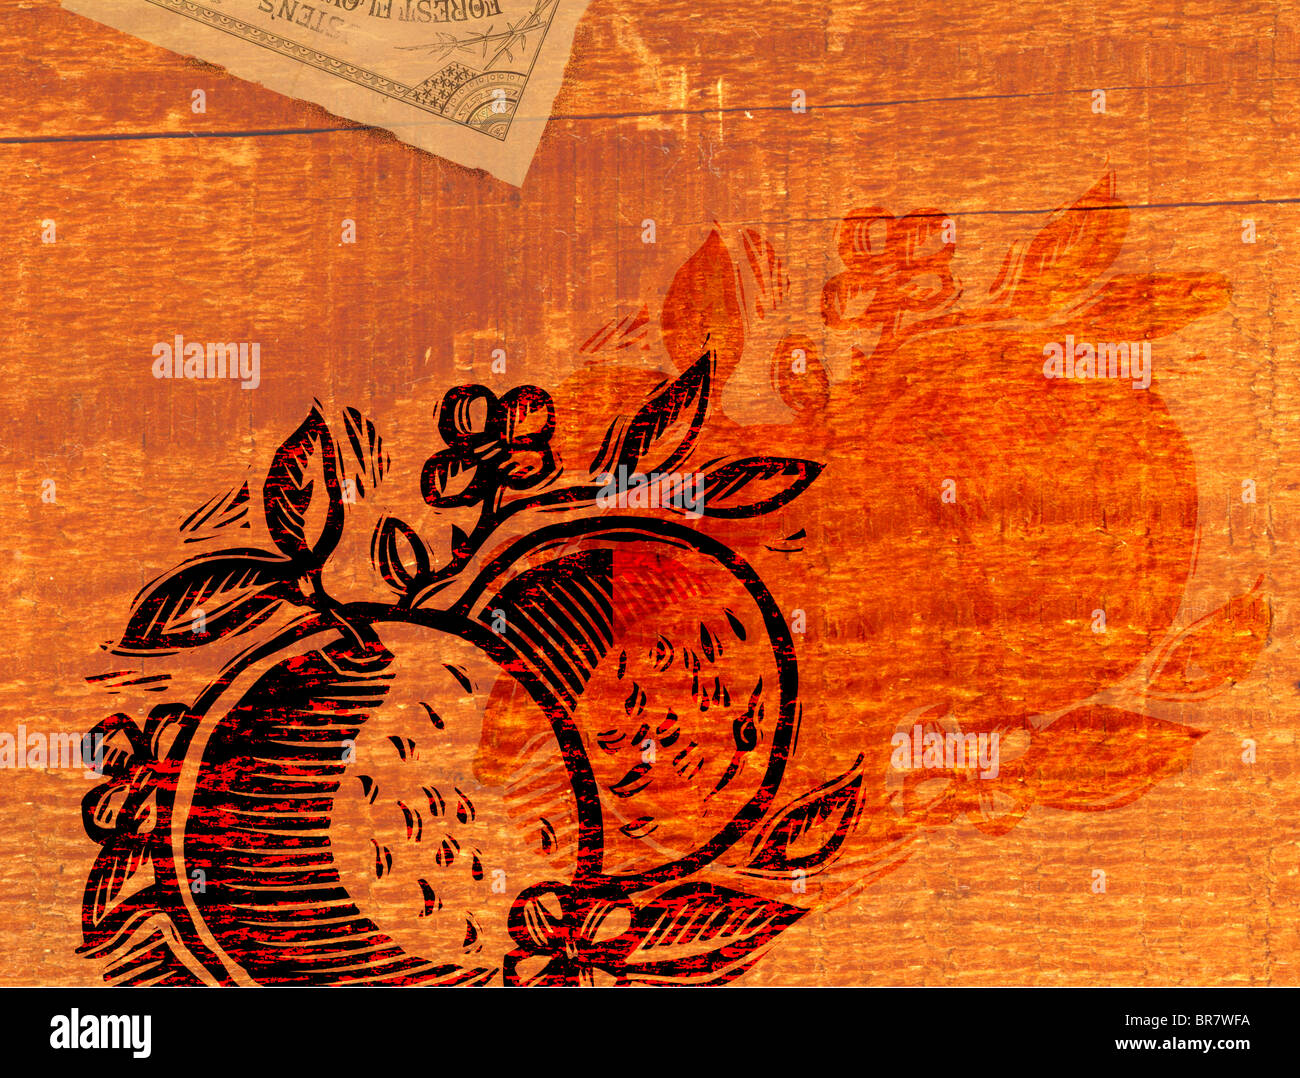 A decorative orange collage Stock Photo